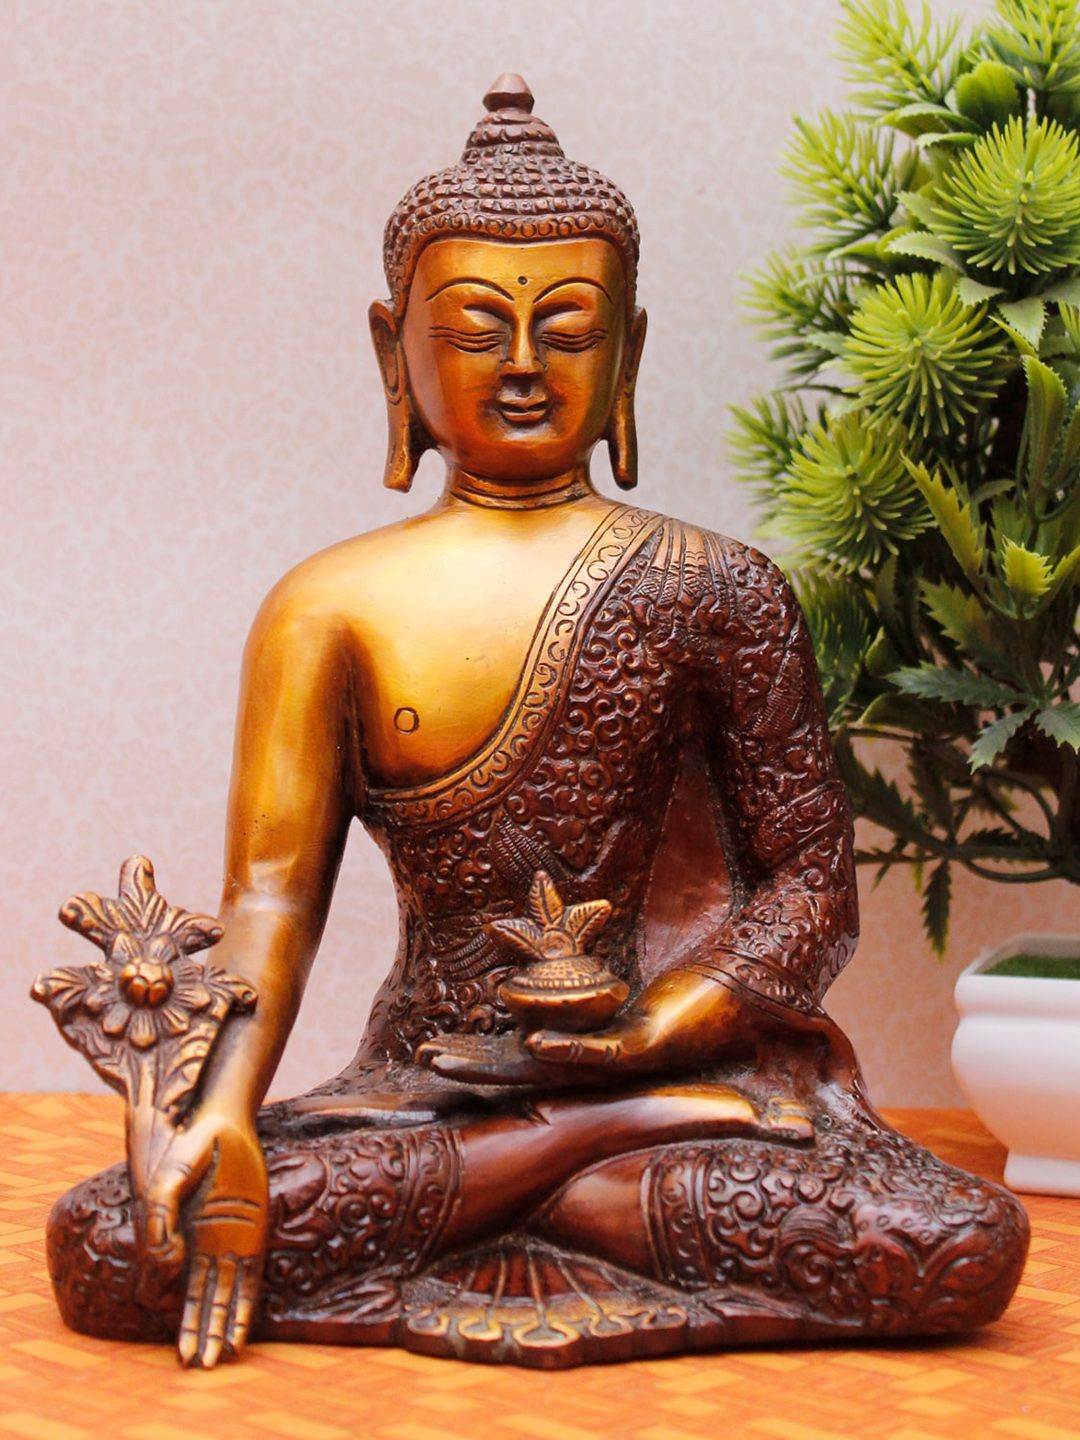 StatueStudio Copper & Orange Metal Hand Crafted Carved Buddha Statue Showpiece Price in India